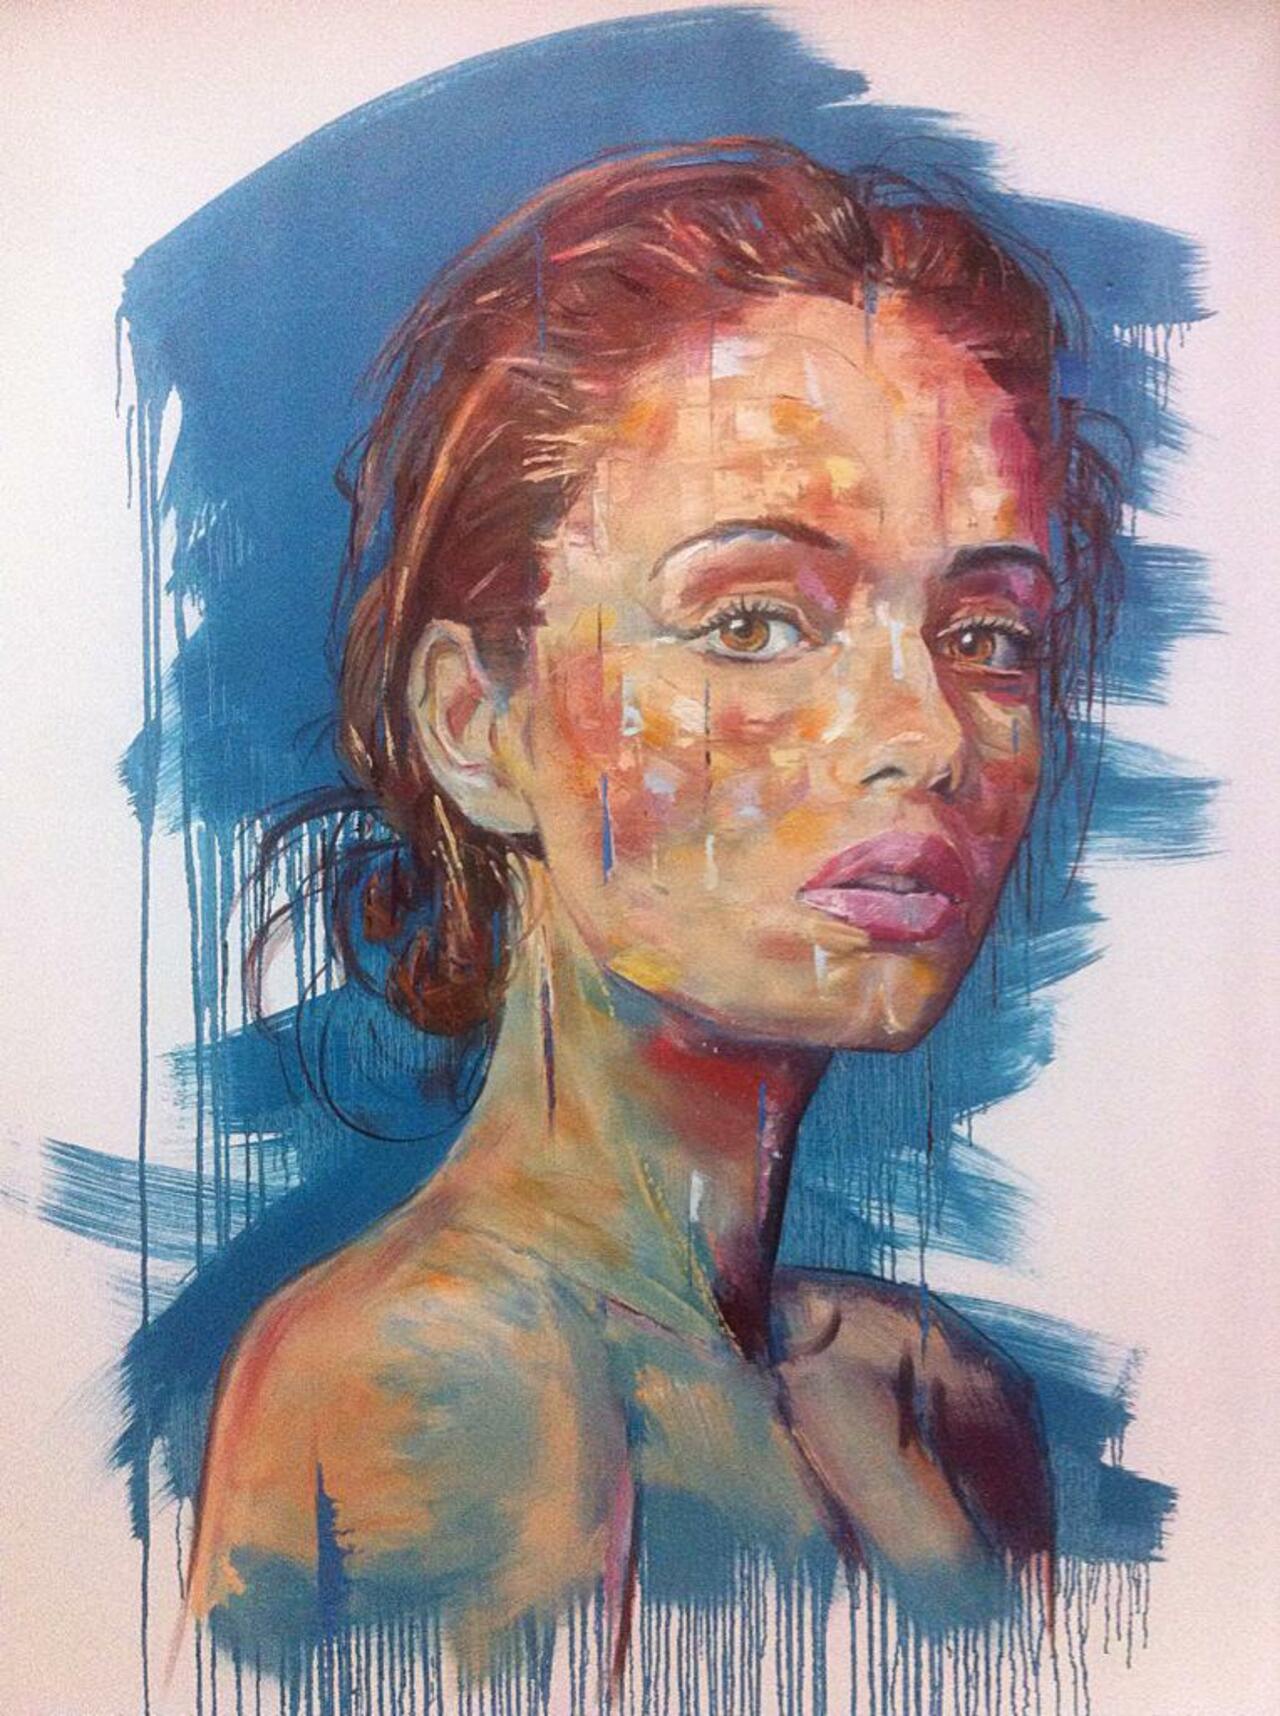 Oil on canvas, 160 x 130cm #art #painting #model #beauty #portrait #eyes #lips #hair #female http://t.co/XovVyJBJBY” @BrainsReins @figaar_